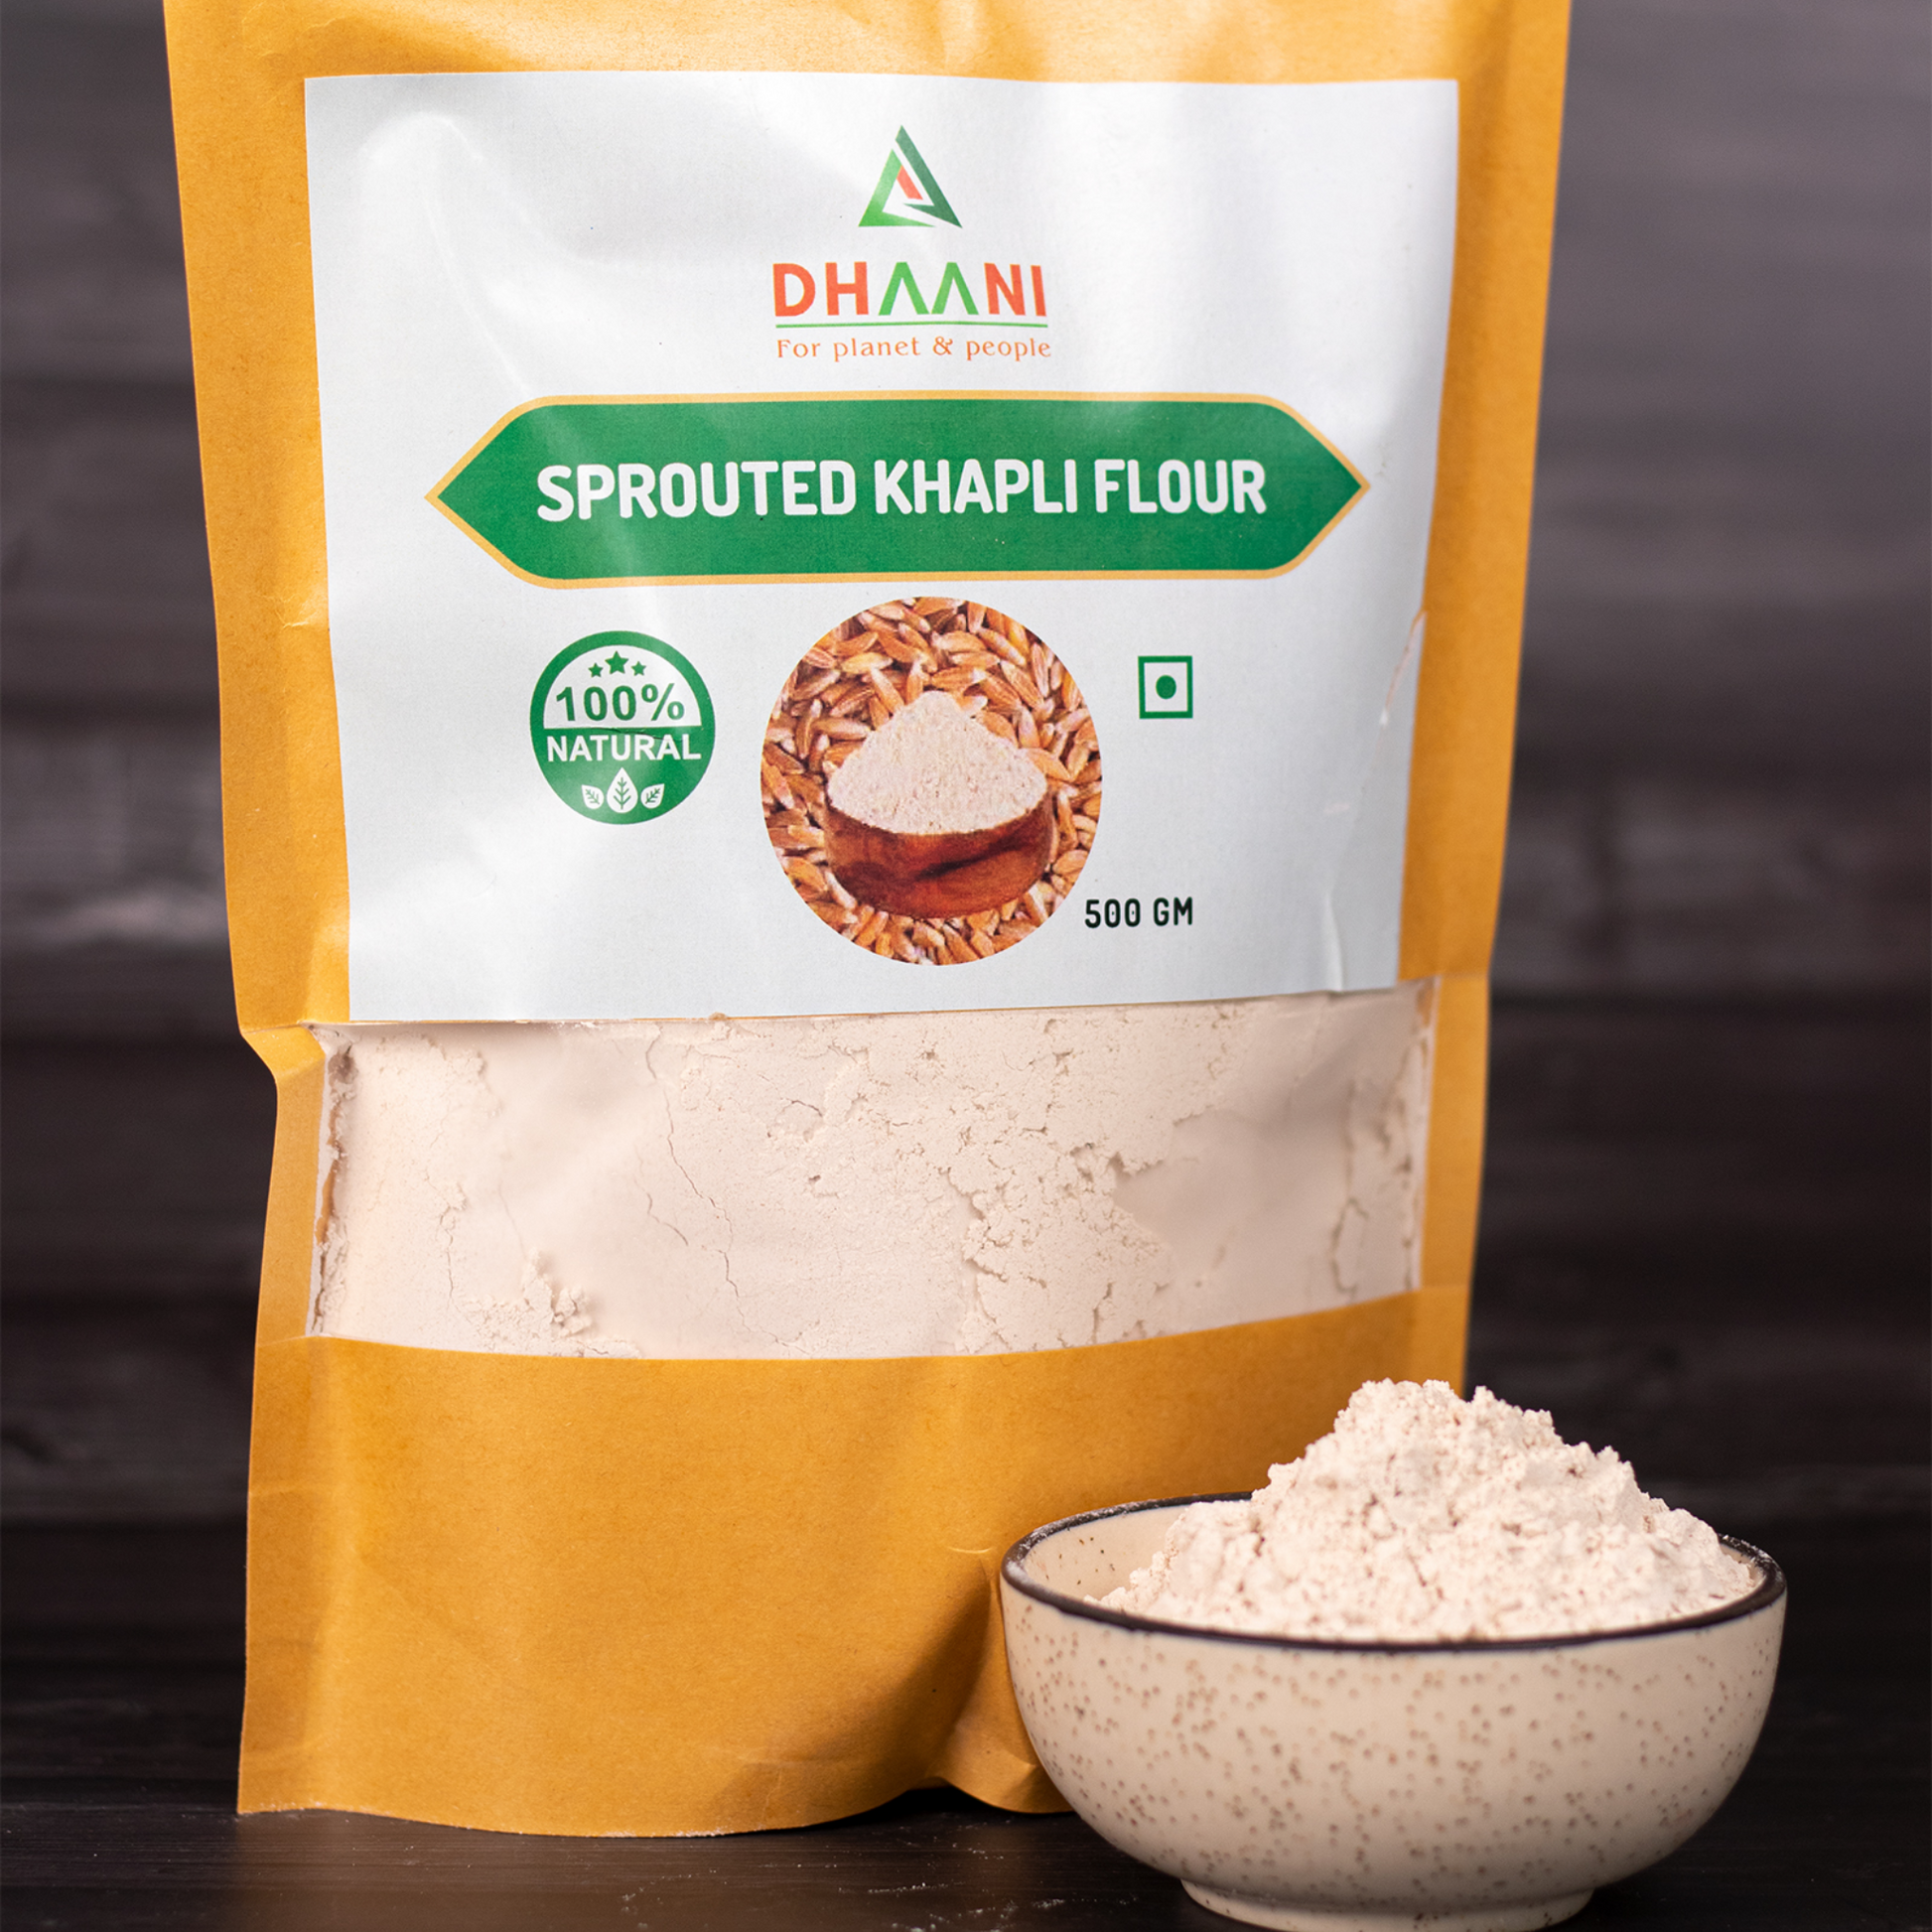 Sprouted Khapli flour